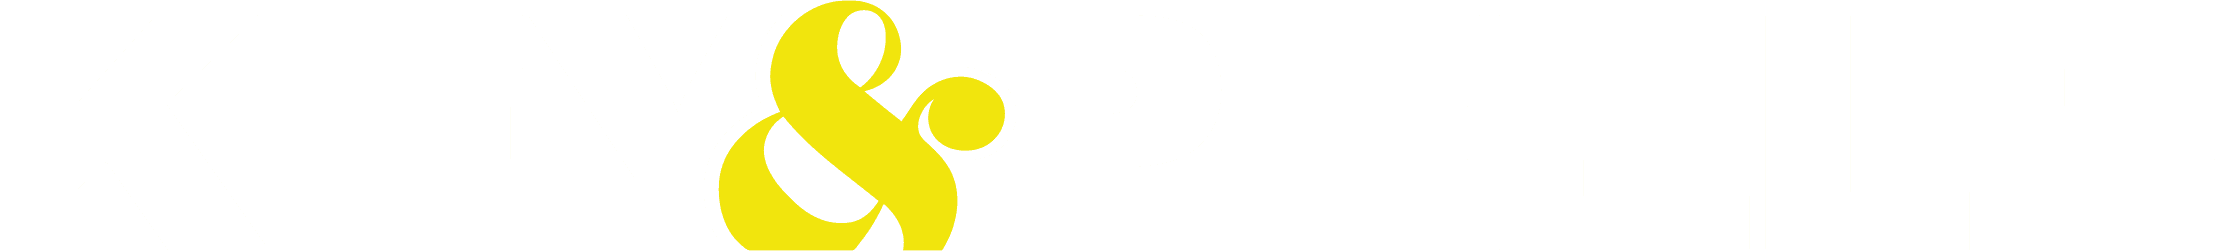 Key & Peele logo